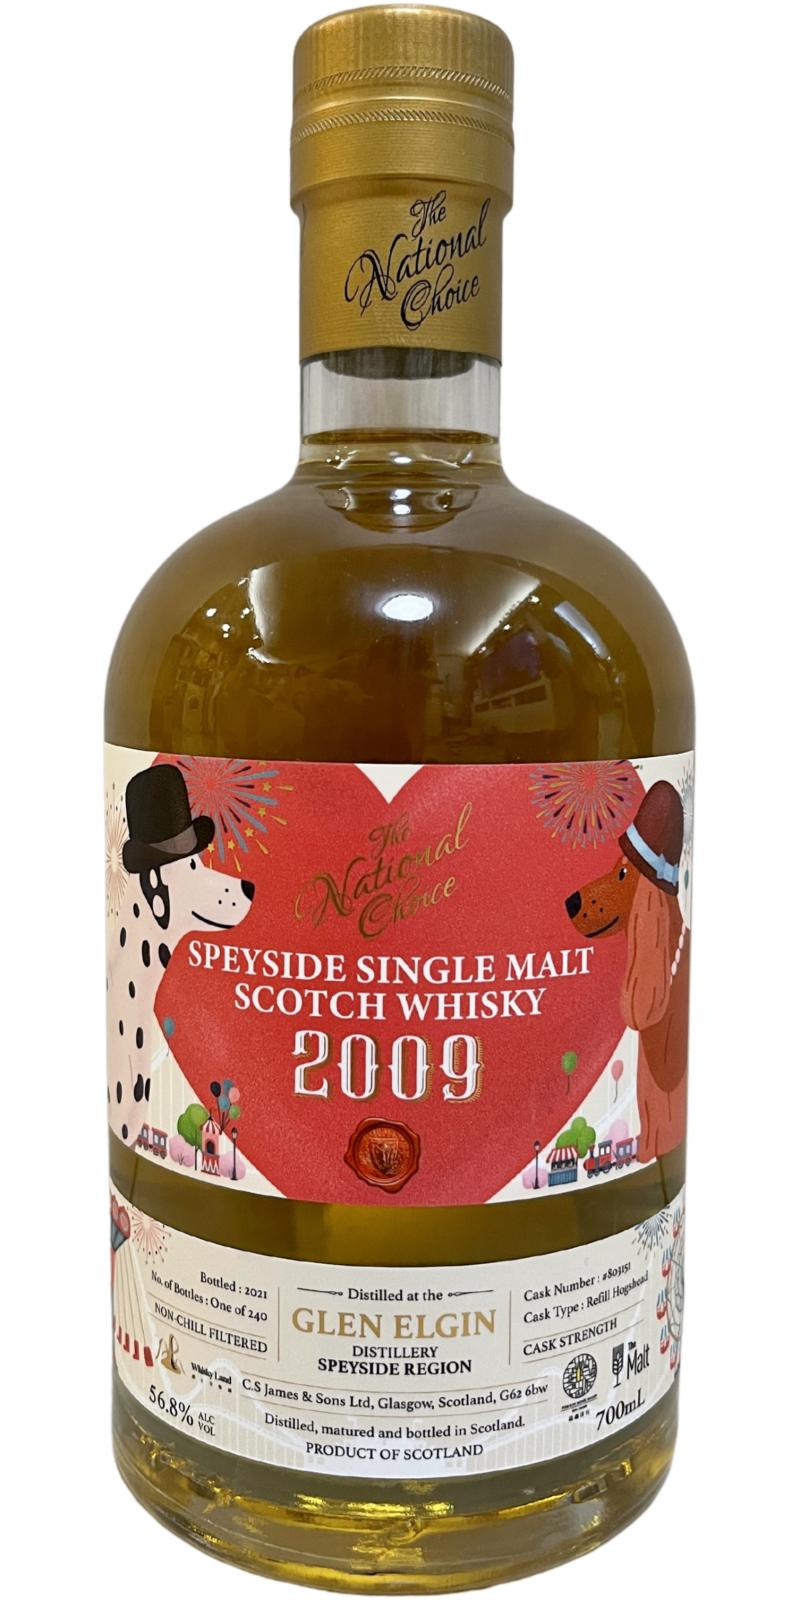 Glen Elgin 2009 CSJS Refill Hogshead #803151 Whisky Land The Malt Pin Xin Yang Xing 56.8% 700ml